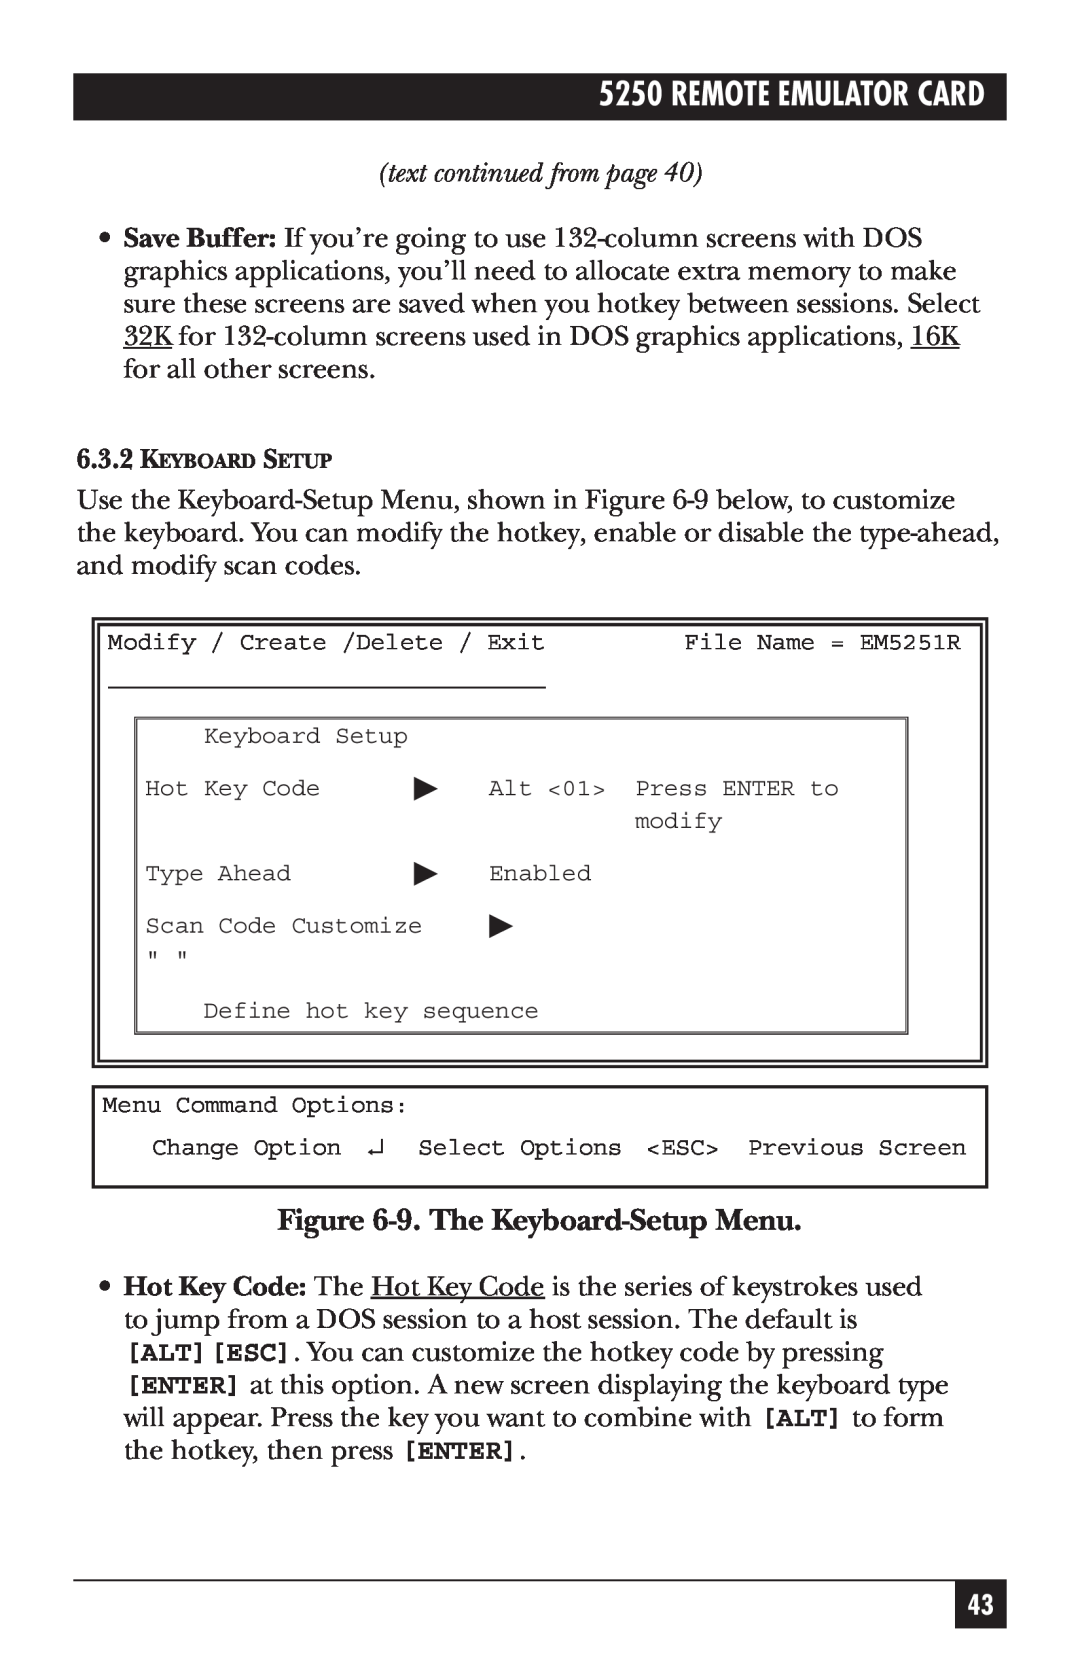 Black Box Remote Emulator Card, 5250 manual 9.The Keyboard-SetupMenu, text continued from page 